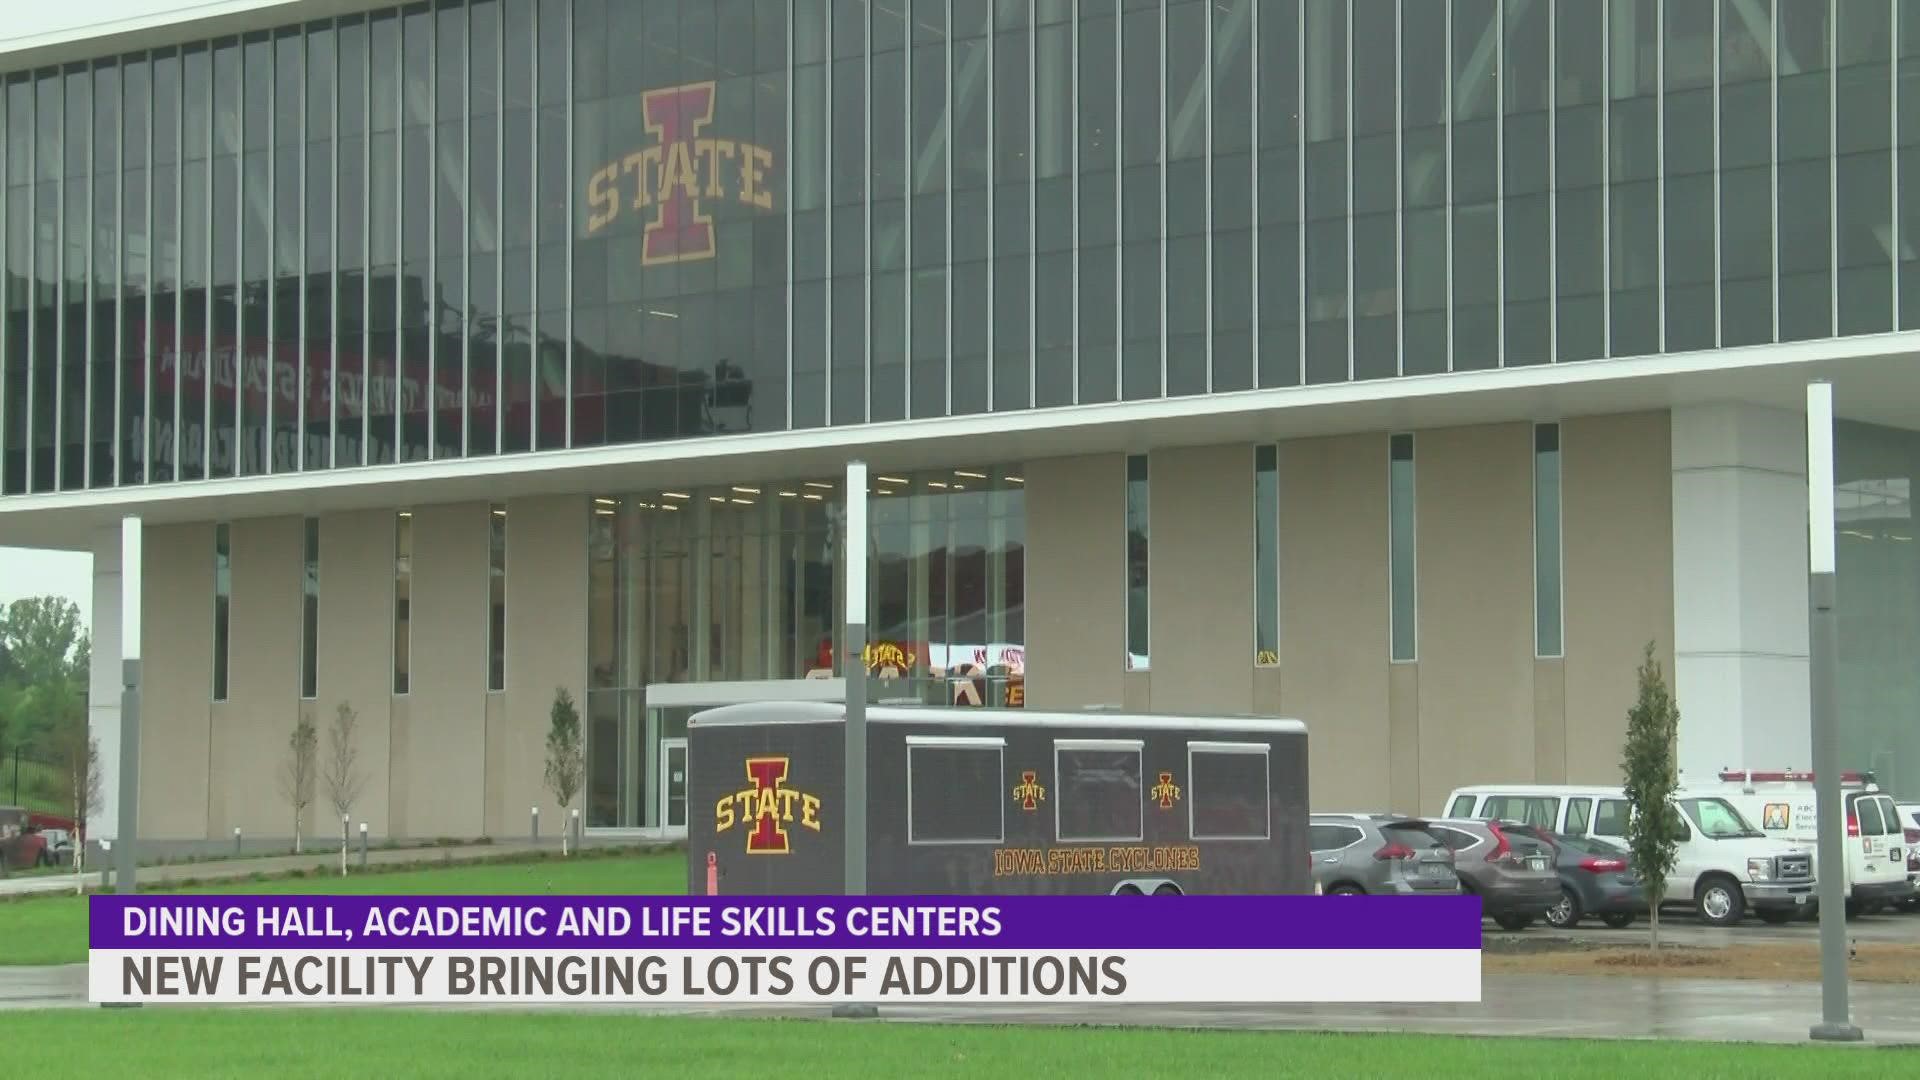 The new addition cost Iowa State University around $90 million.